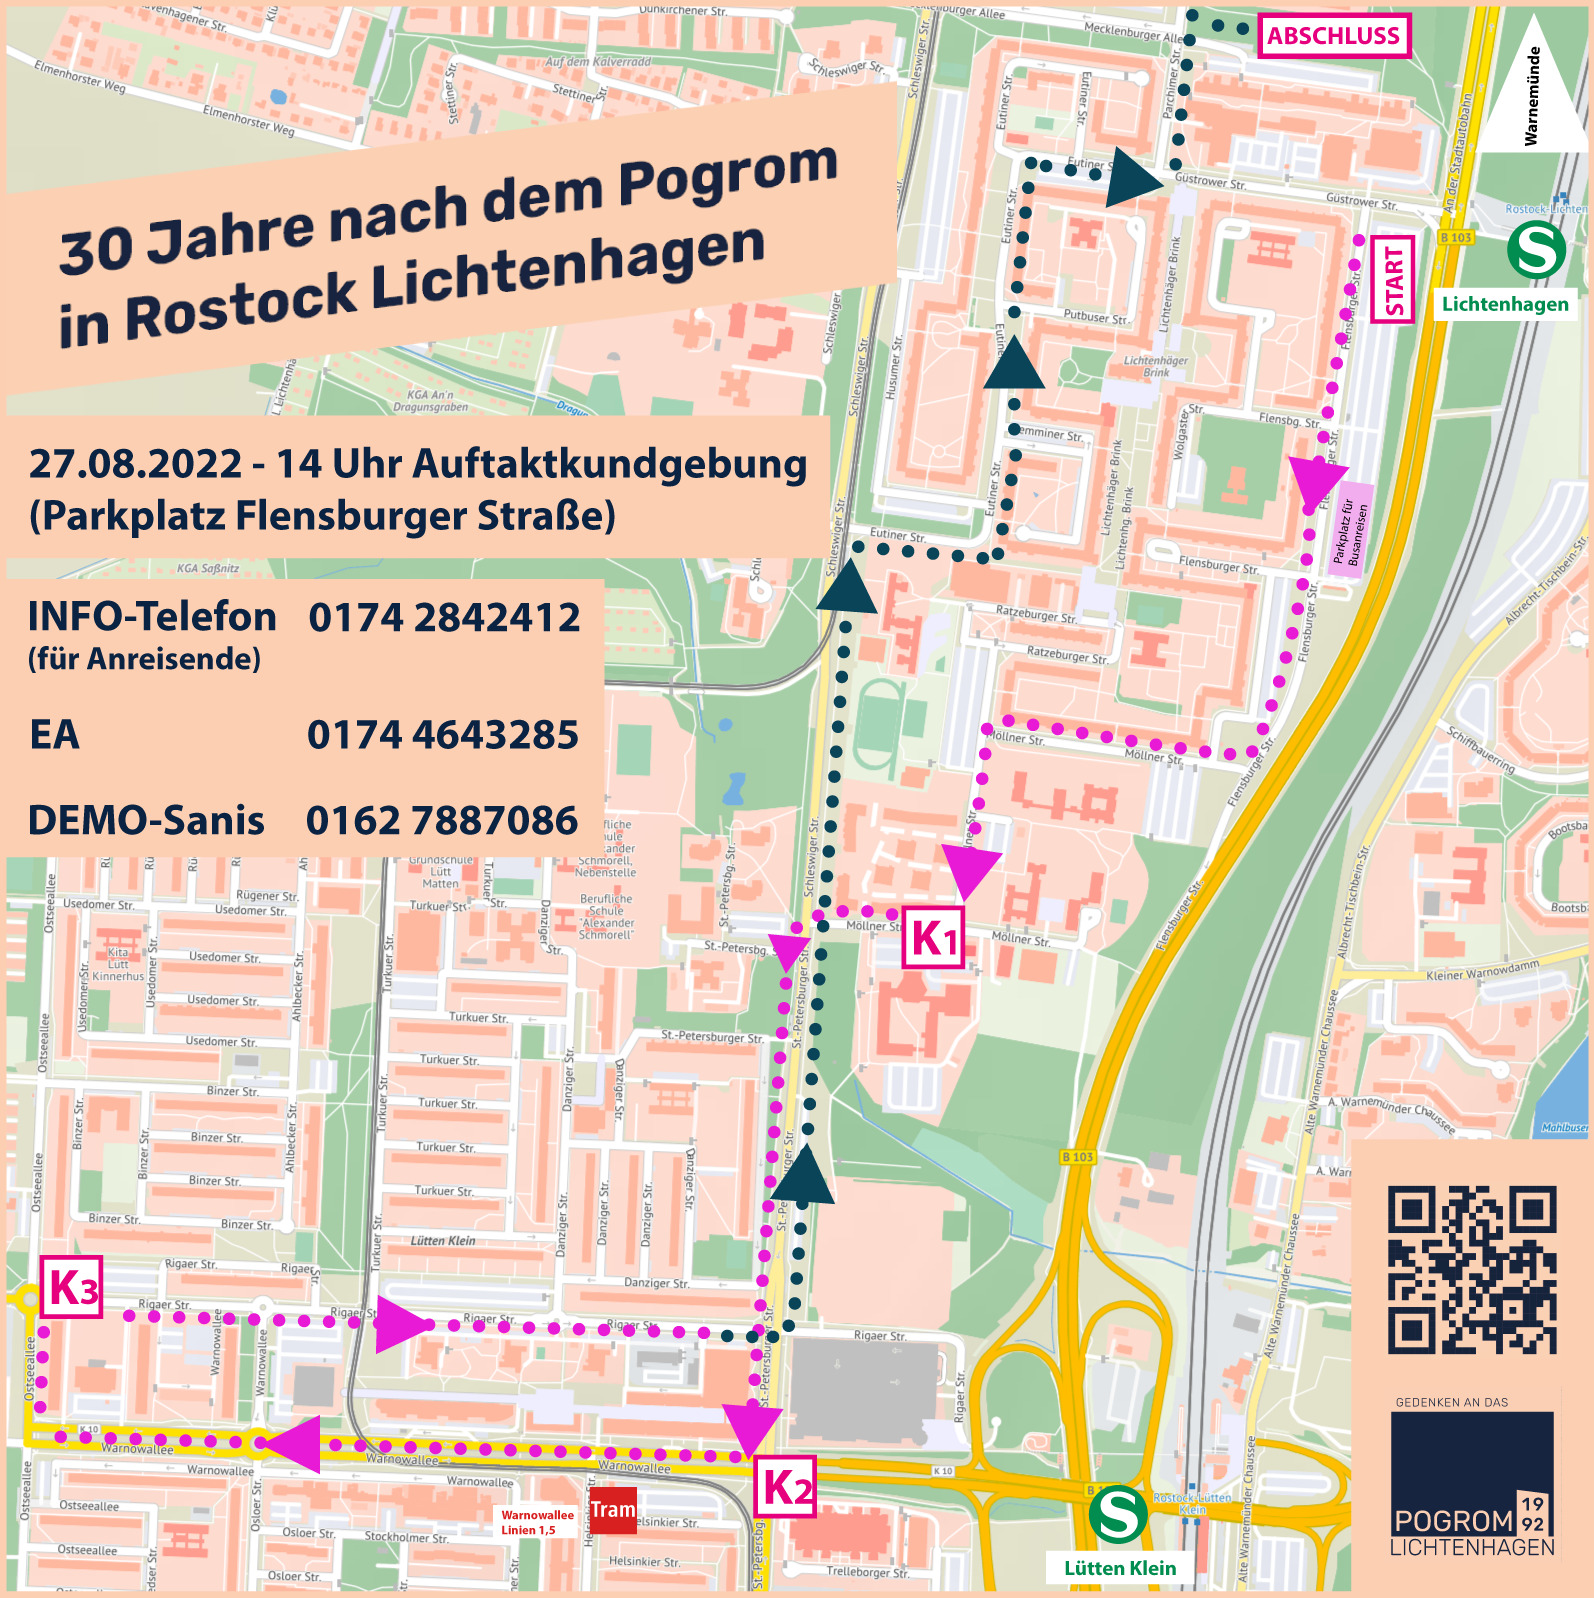 Route of demonstration in Lichtenhagen